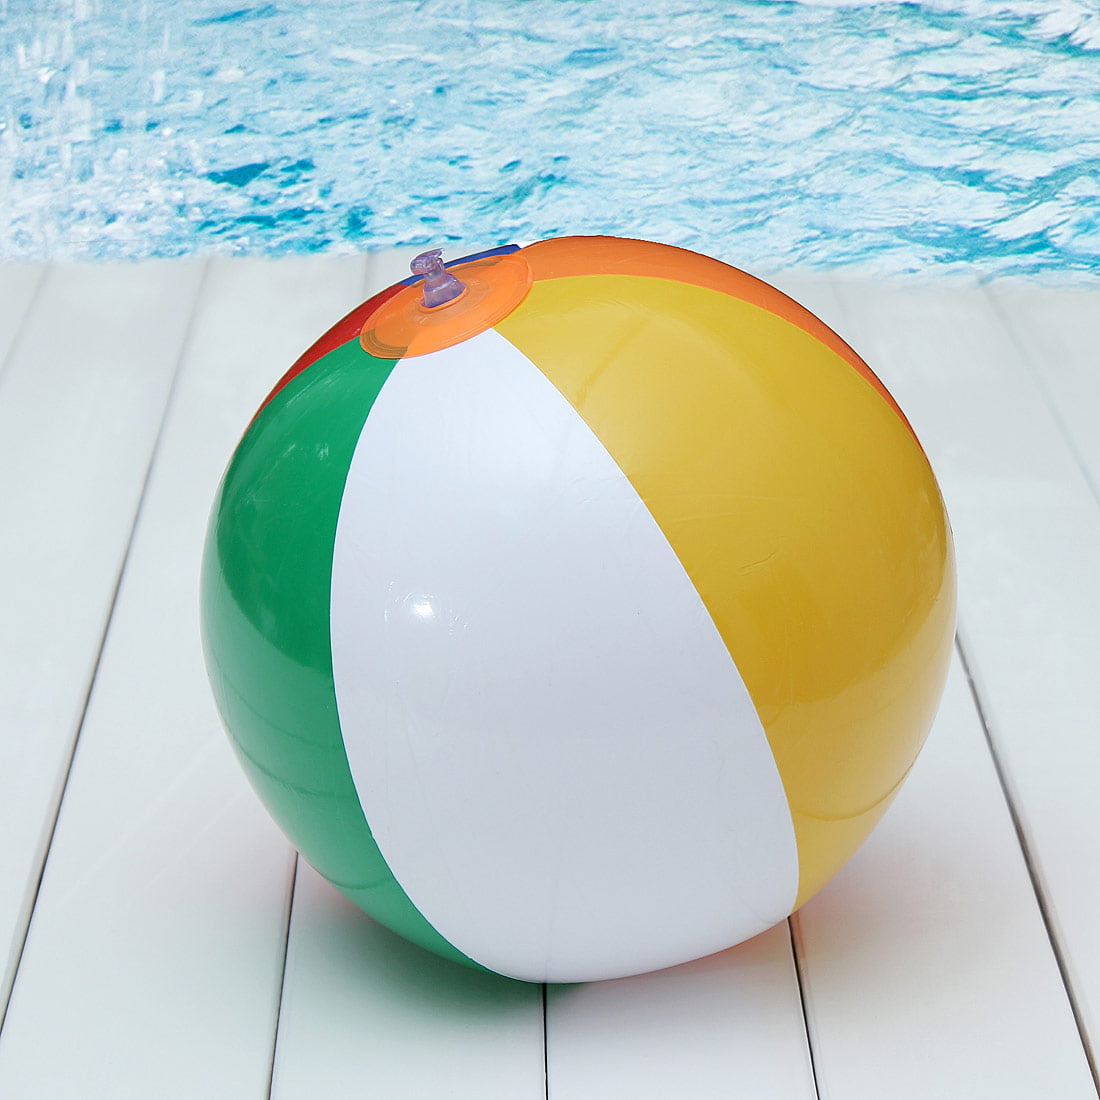 Inflatable Beach Ball For Children Kids Outdoor Game Beach Sport Ball Toy 